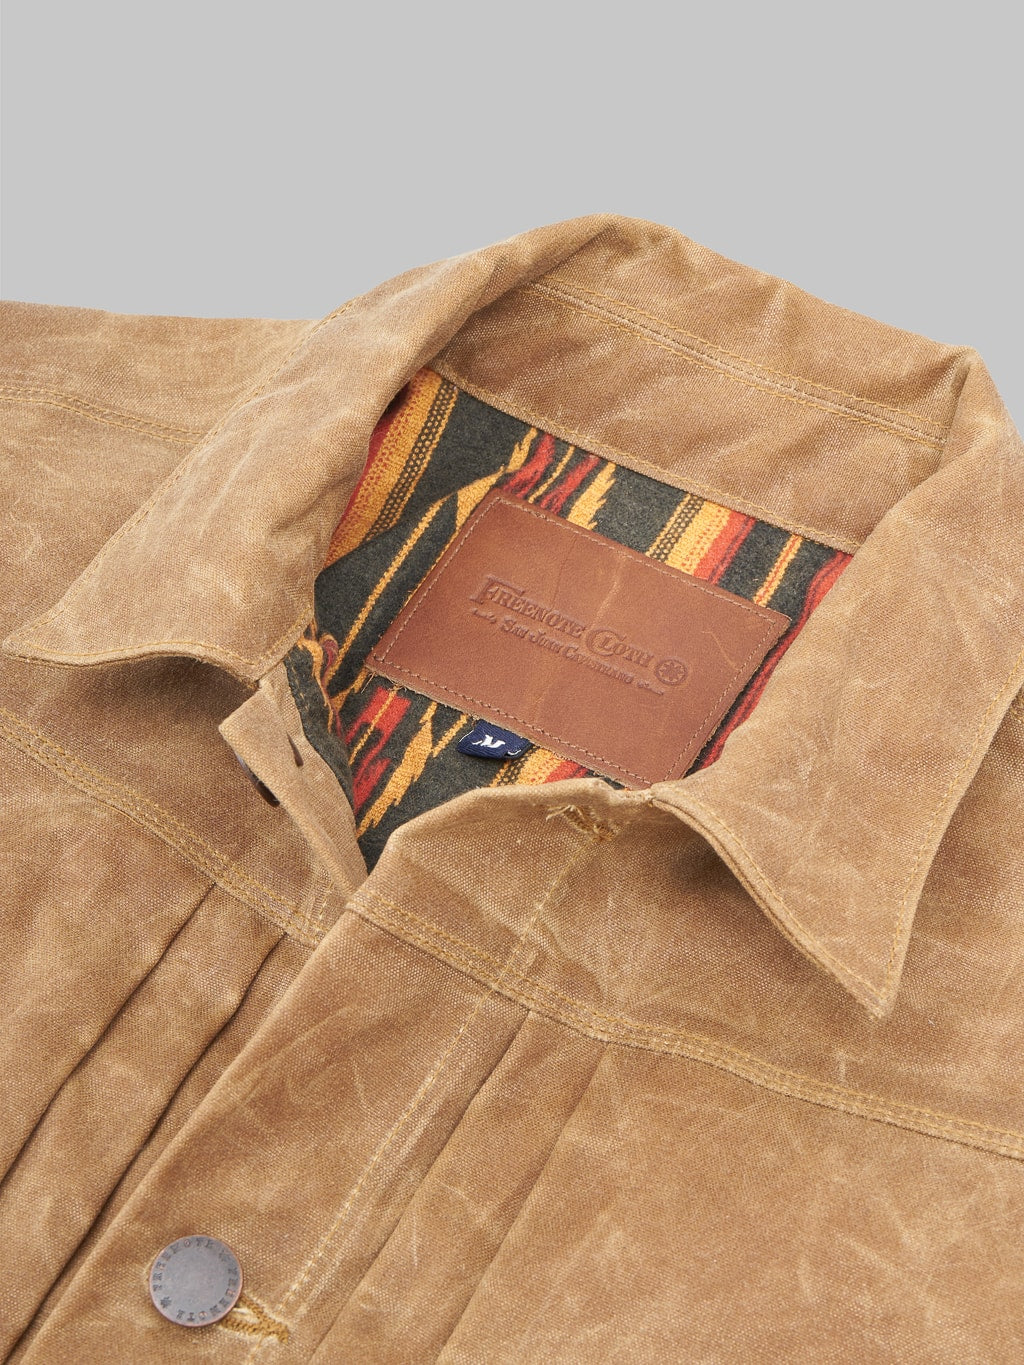 Freenote Cloth Riders Jacket Waxed Canvas Rust collar closeup